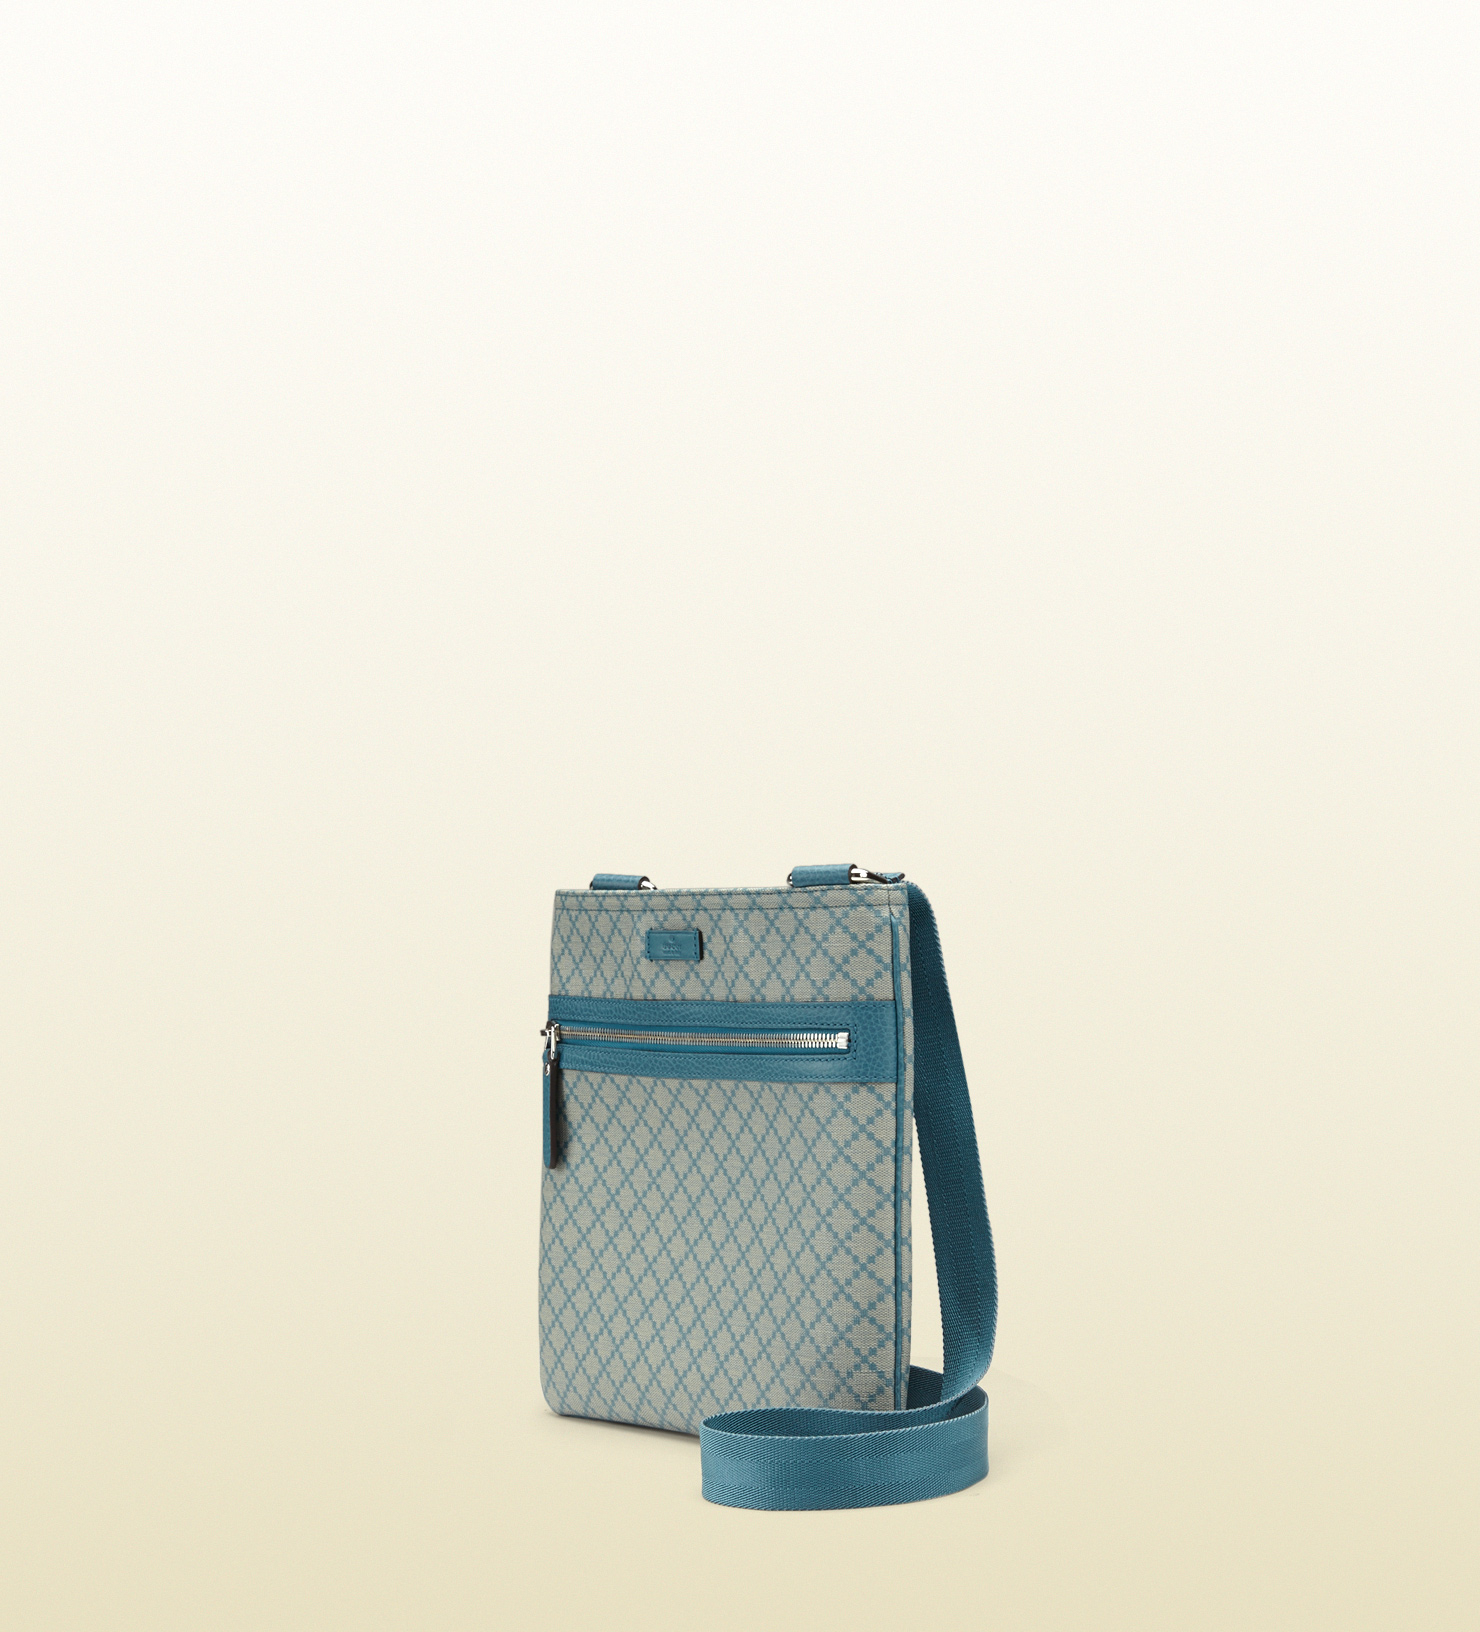 Lyst - Gucci Online Exclusive Diamante Supreme Canvas Flat Messenger Bag in Blue for Men